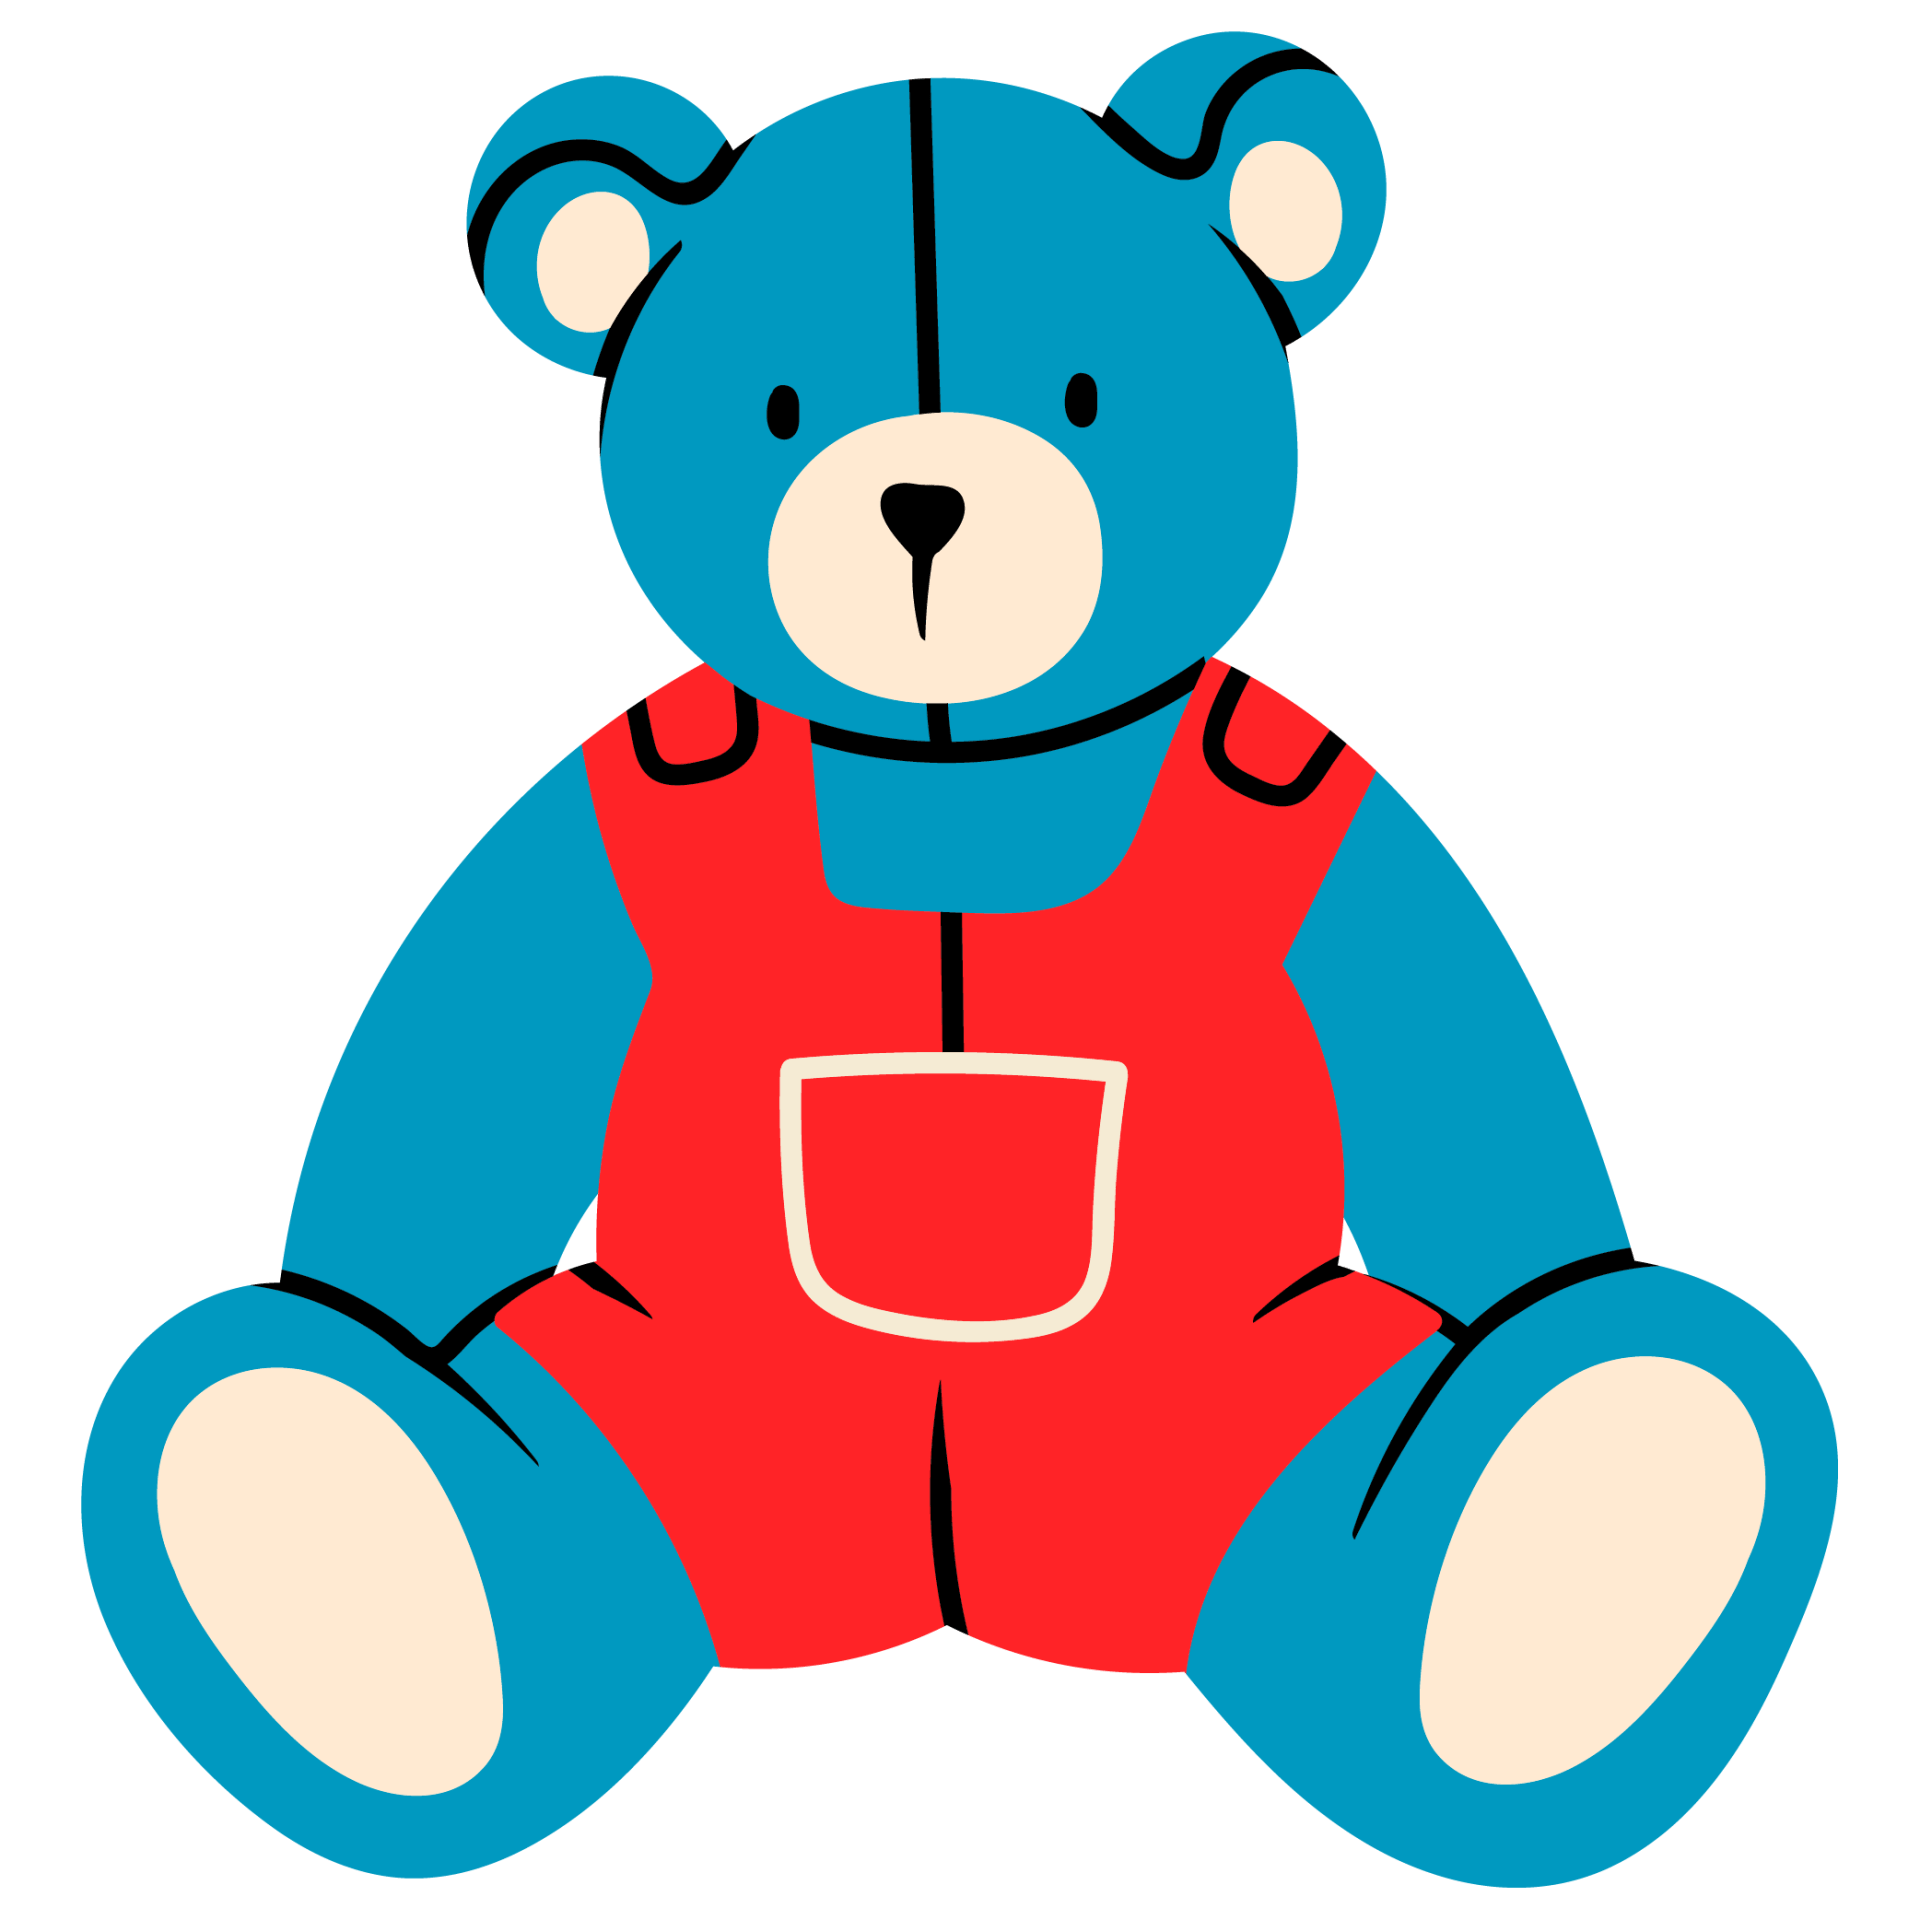 Blue Teddy Bear wearing a Red Jumper. Childhood, children games, preschool activities concept. Hand drawn Vector.